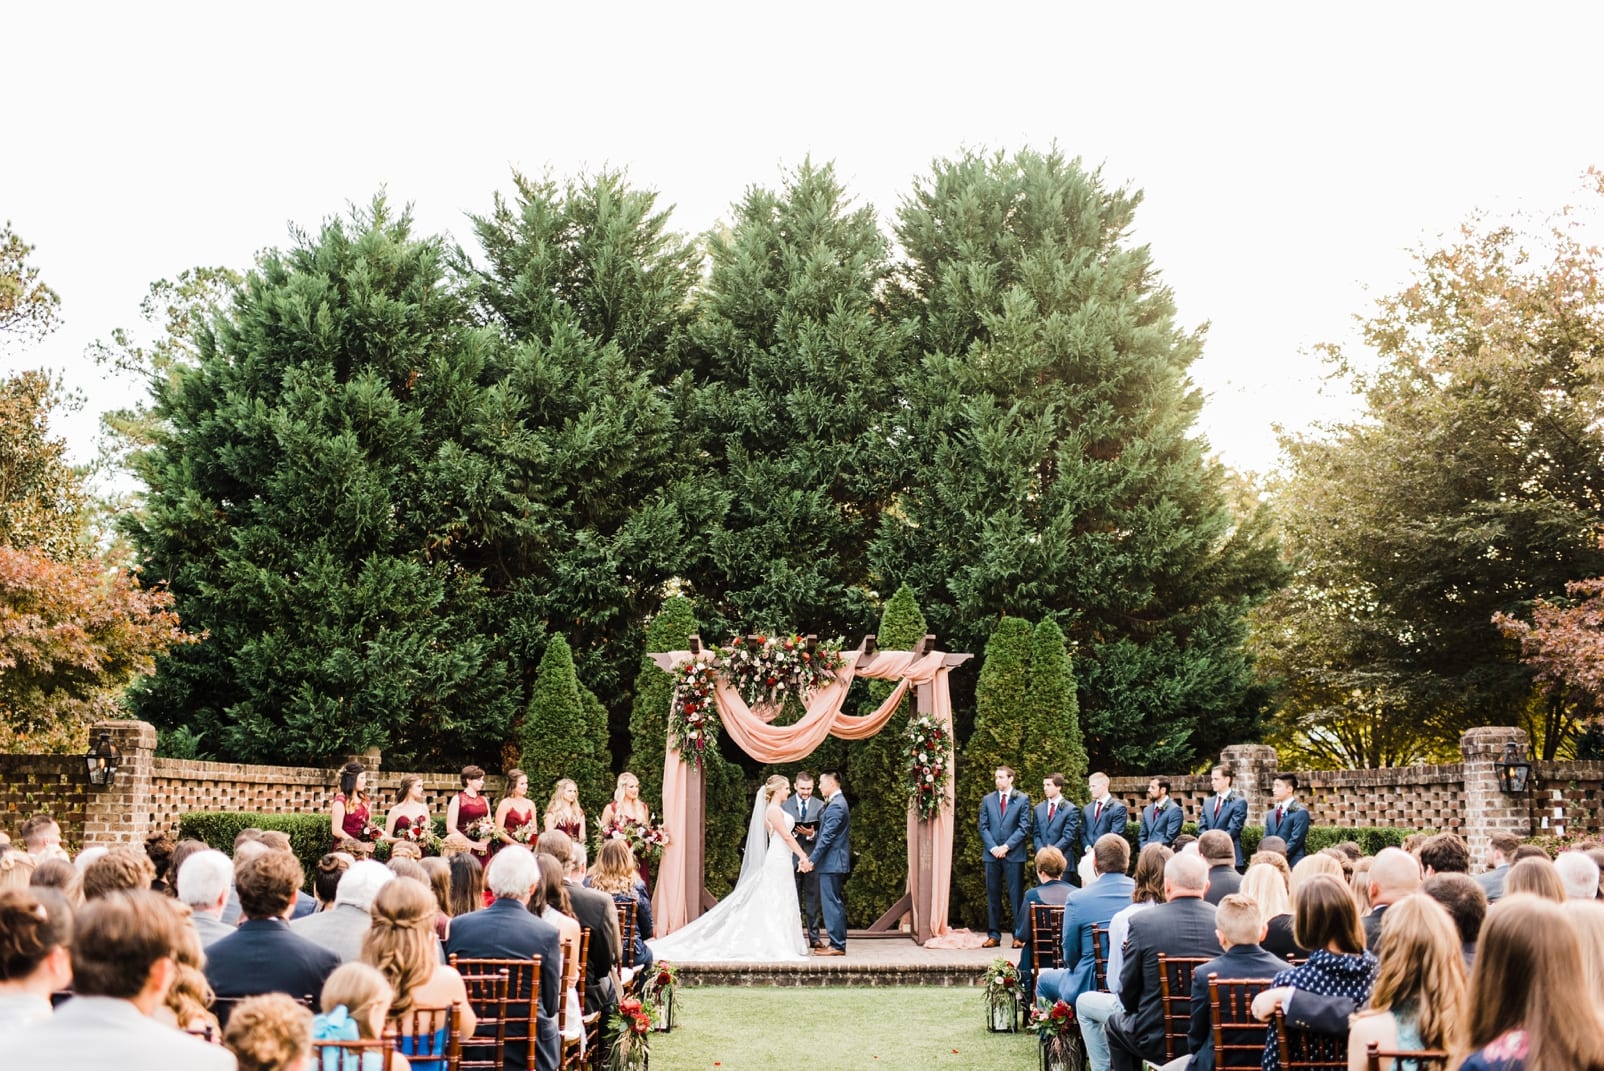 sutherland estate and gardens wedding photographer ceremony inspiration mauve wedding inspiration arbor with fabric draping photo